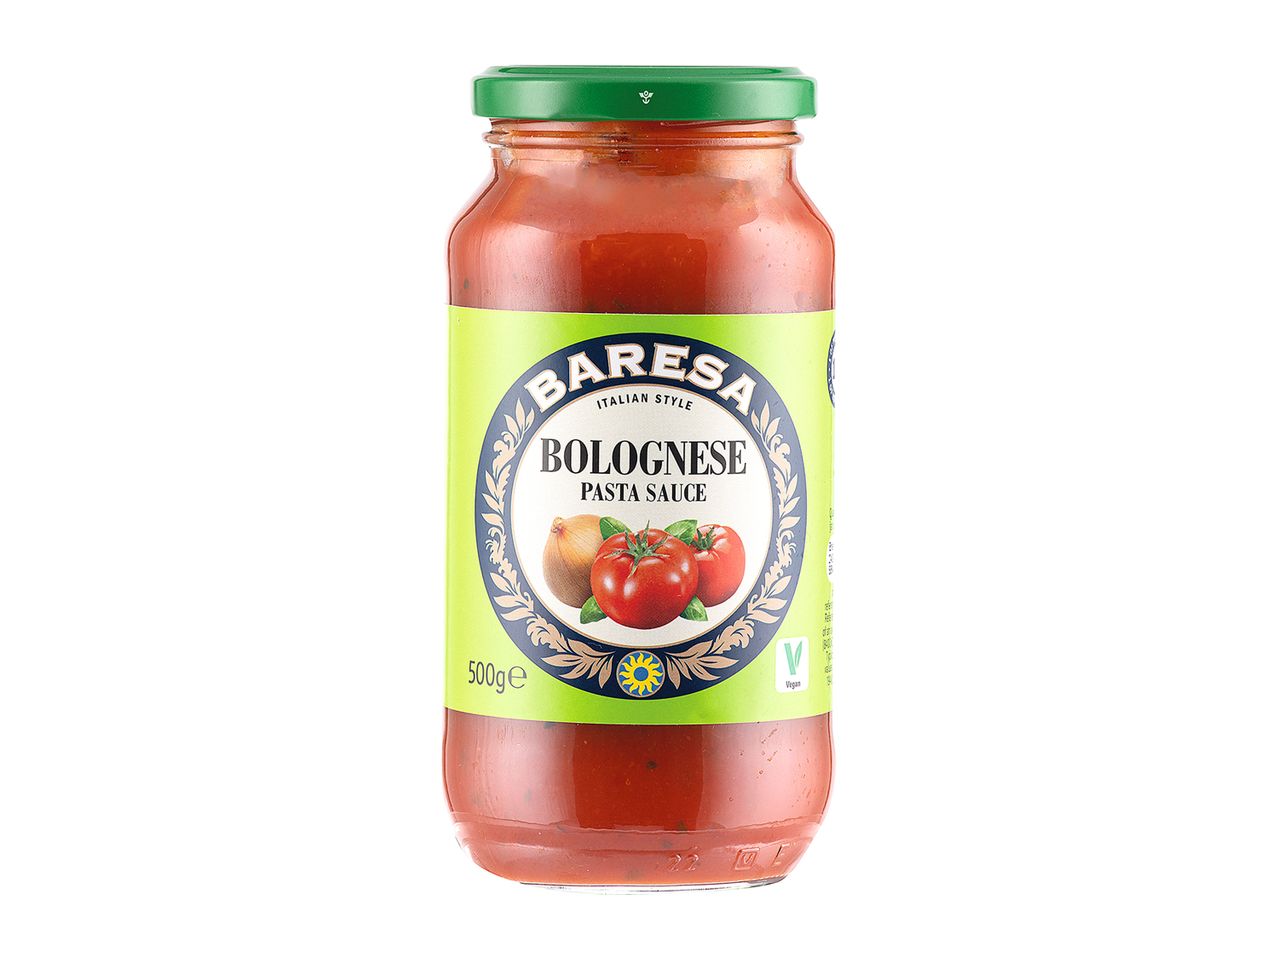 Go to full screen view: Baresa Tomato Bolognese Pasta Sauce - Image 1